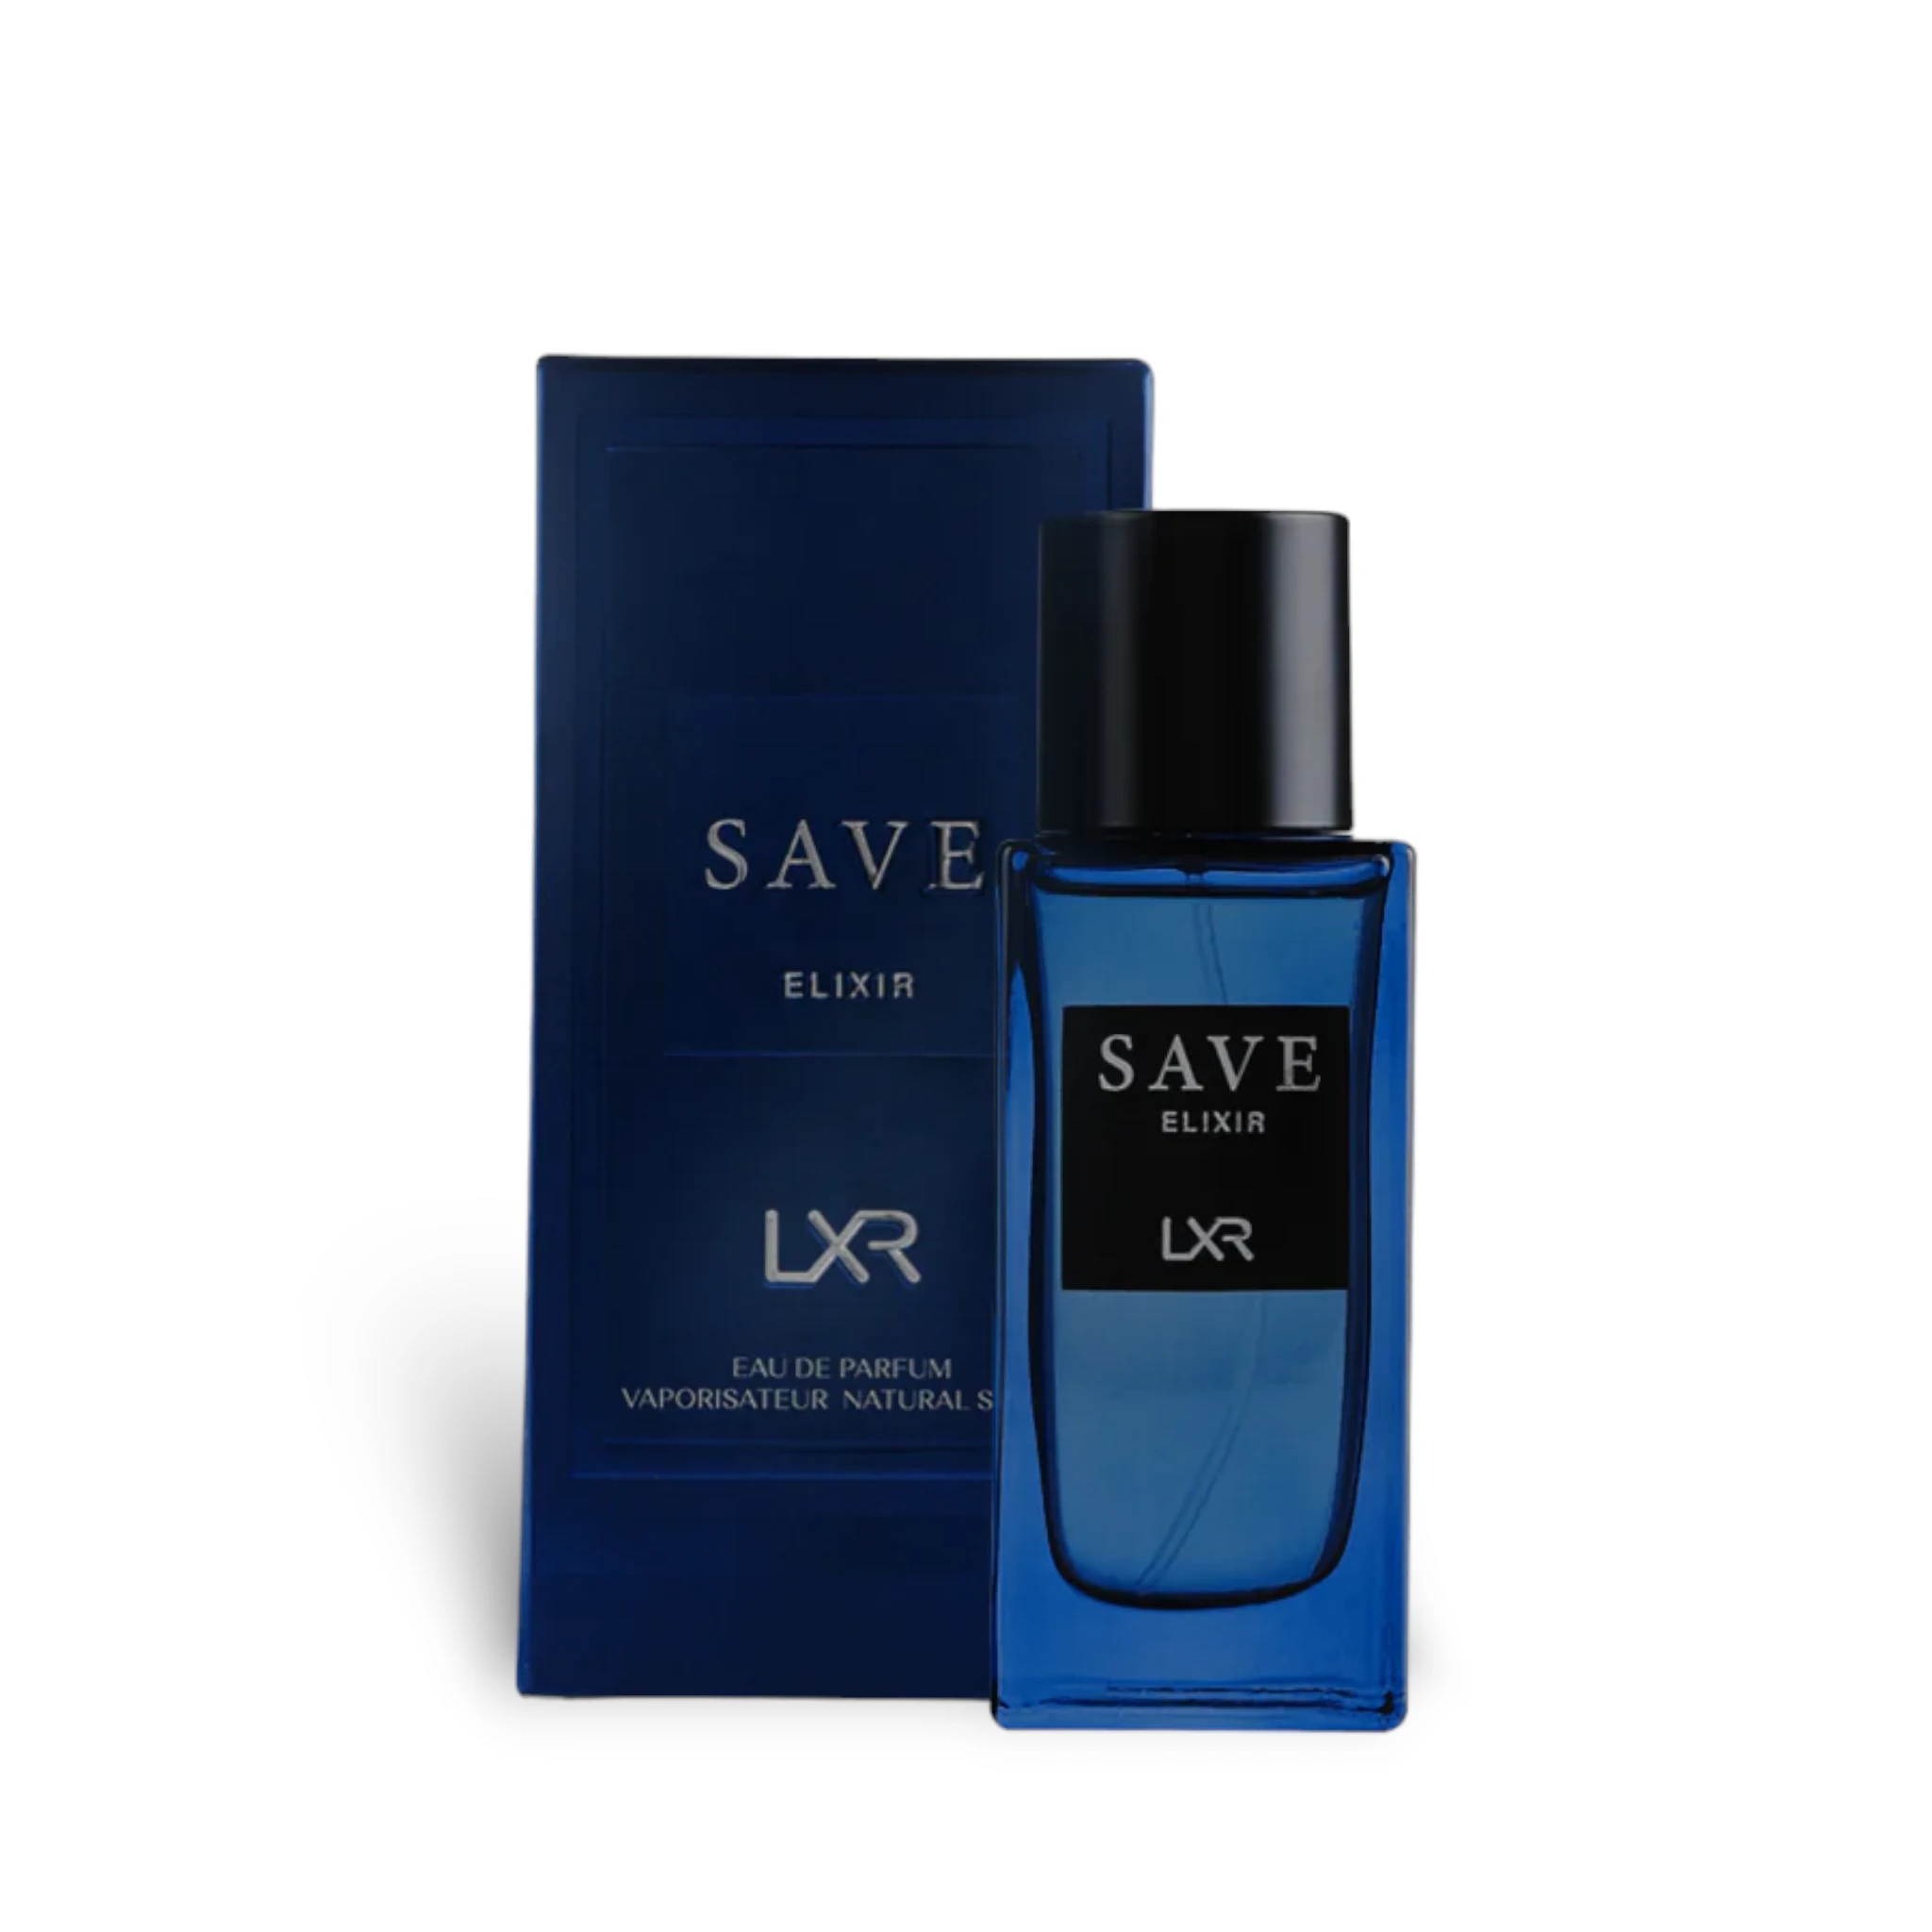 Save Elixir Perfume Eau De Parfum 50Ml By Lxr